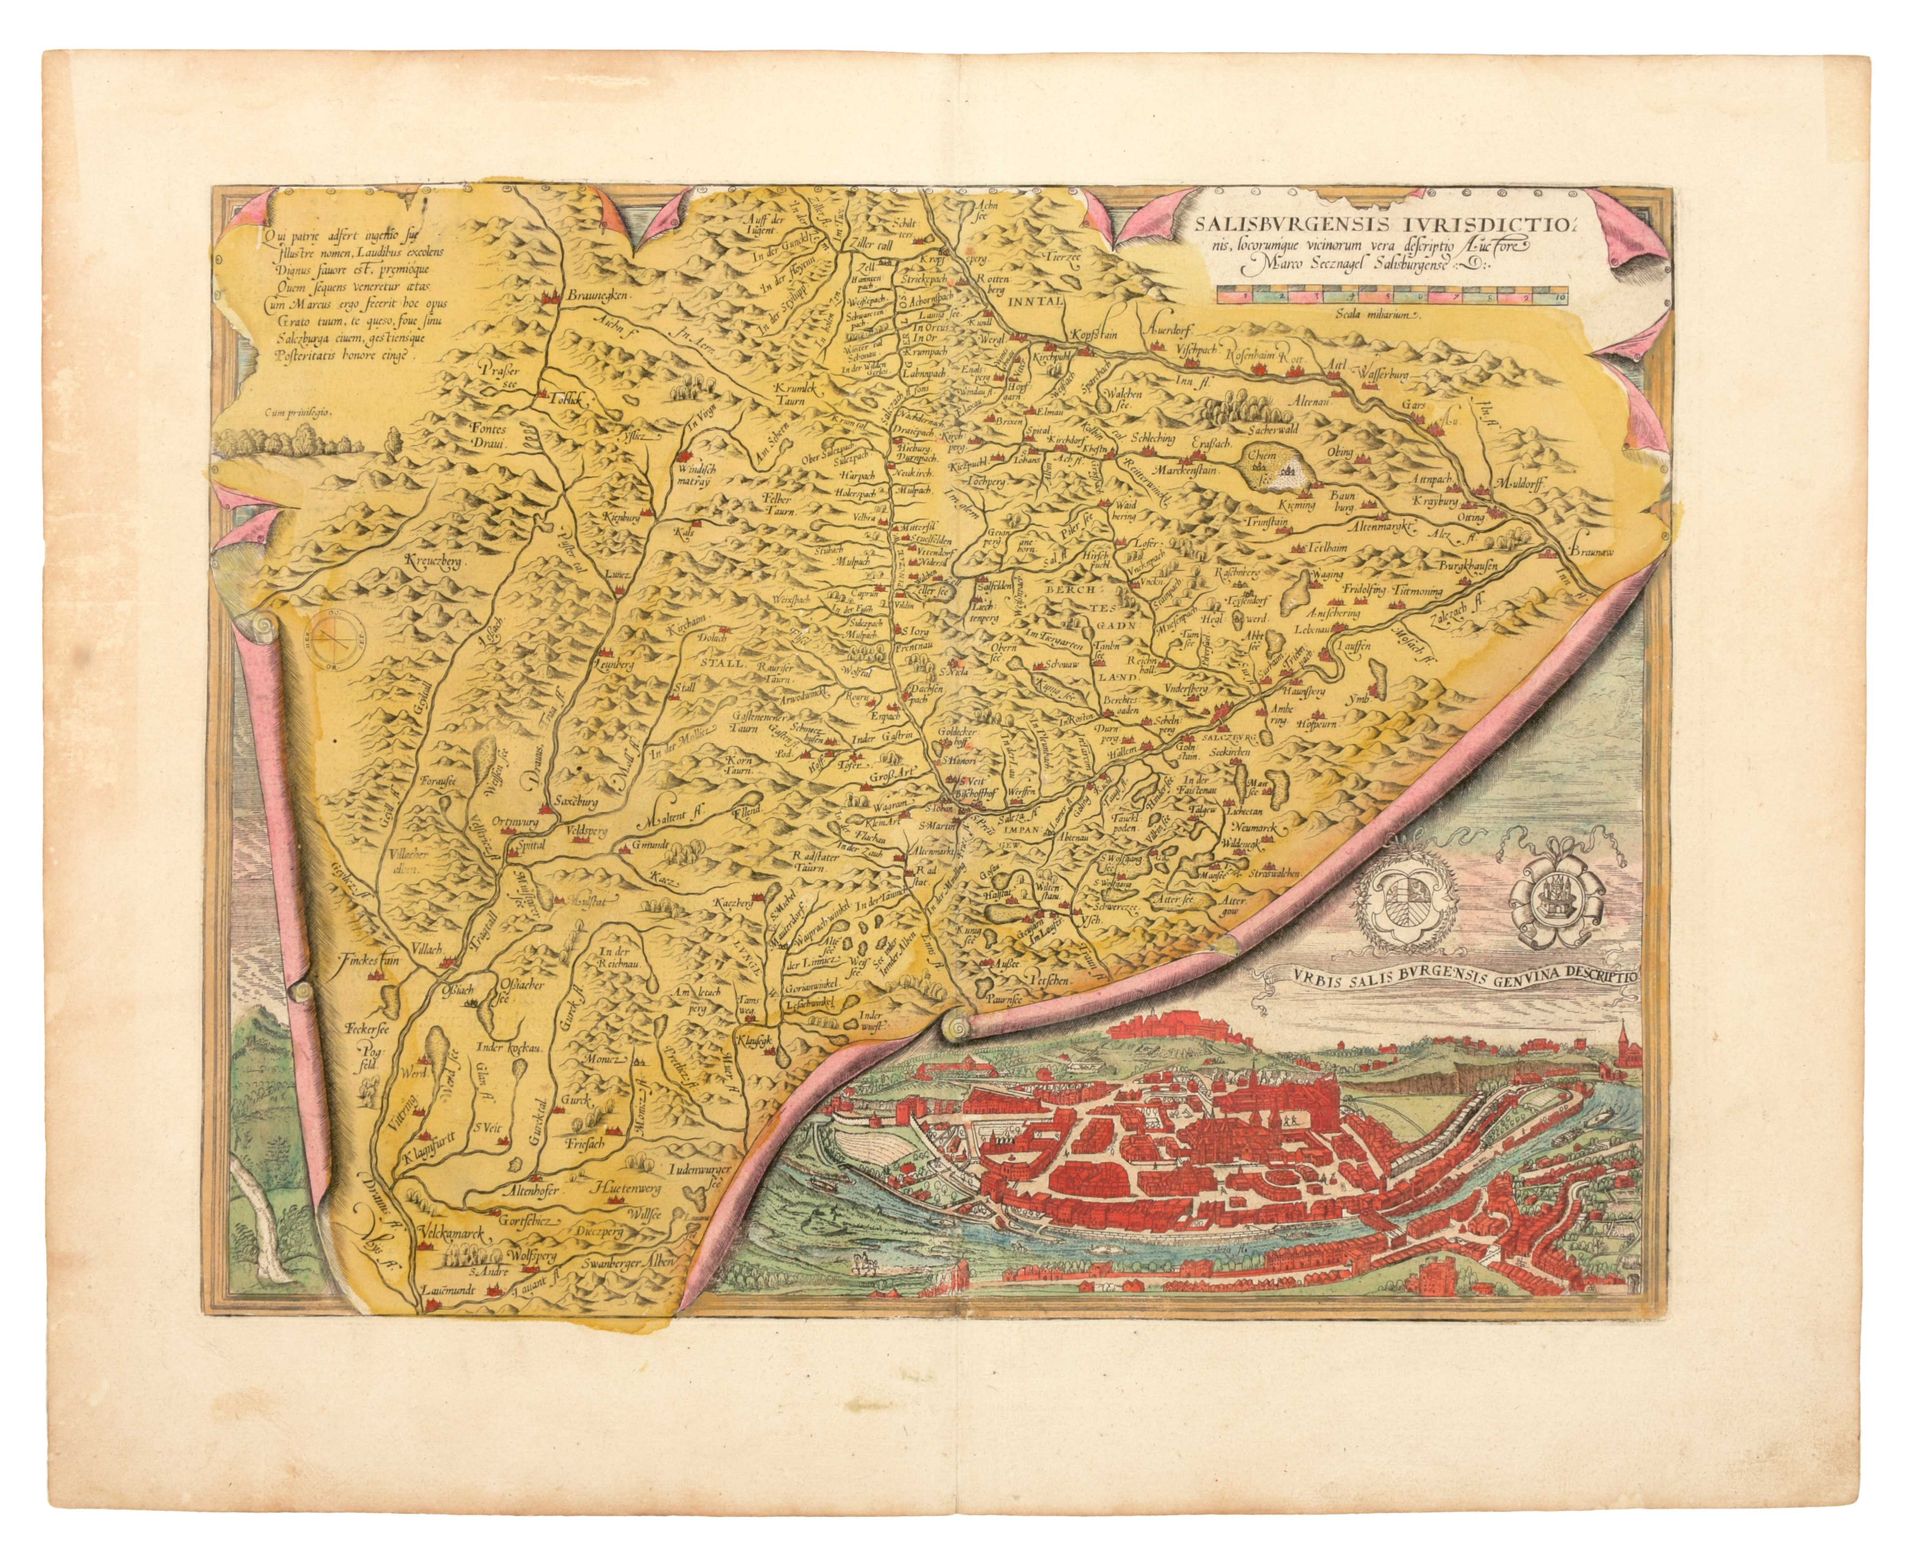 [SALZBURG] 萨利斯伯里的管辖区

A. Ortelius的原版手绘地图（34 x 44厘米），约1590年。

vd Broeck 107; vd K&hellip;